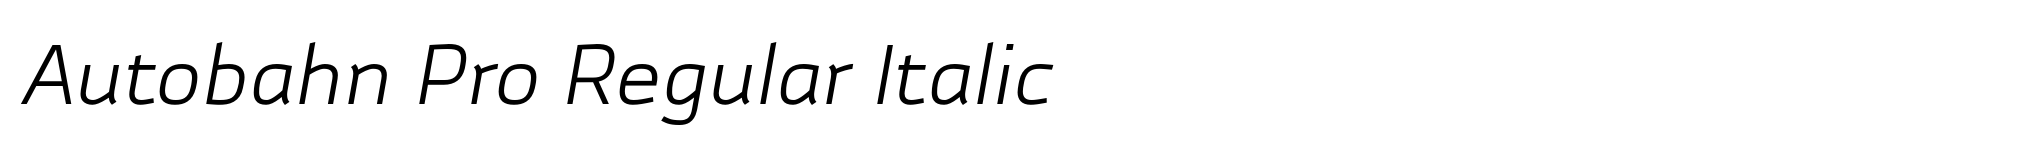 Autobahn Pro Regular Italic image